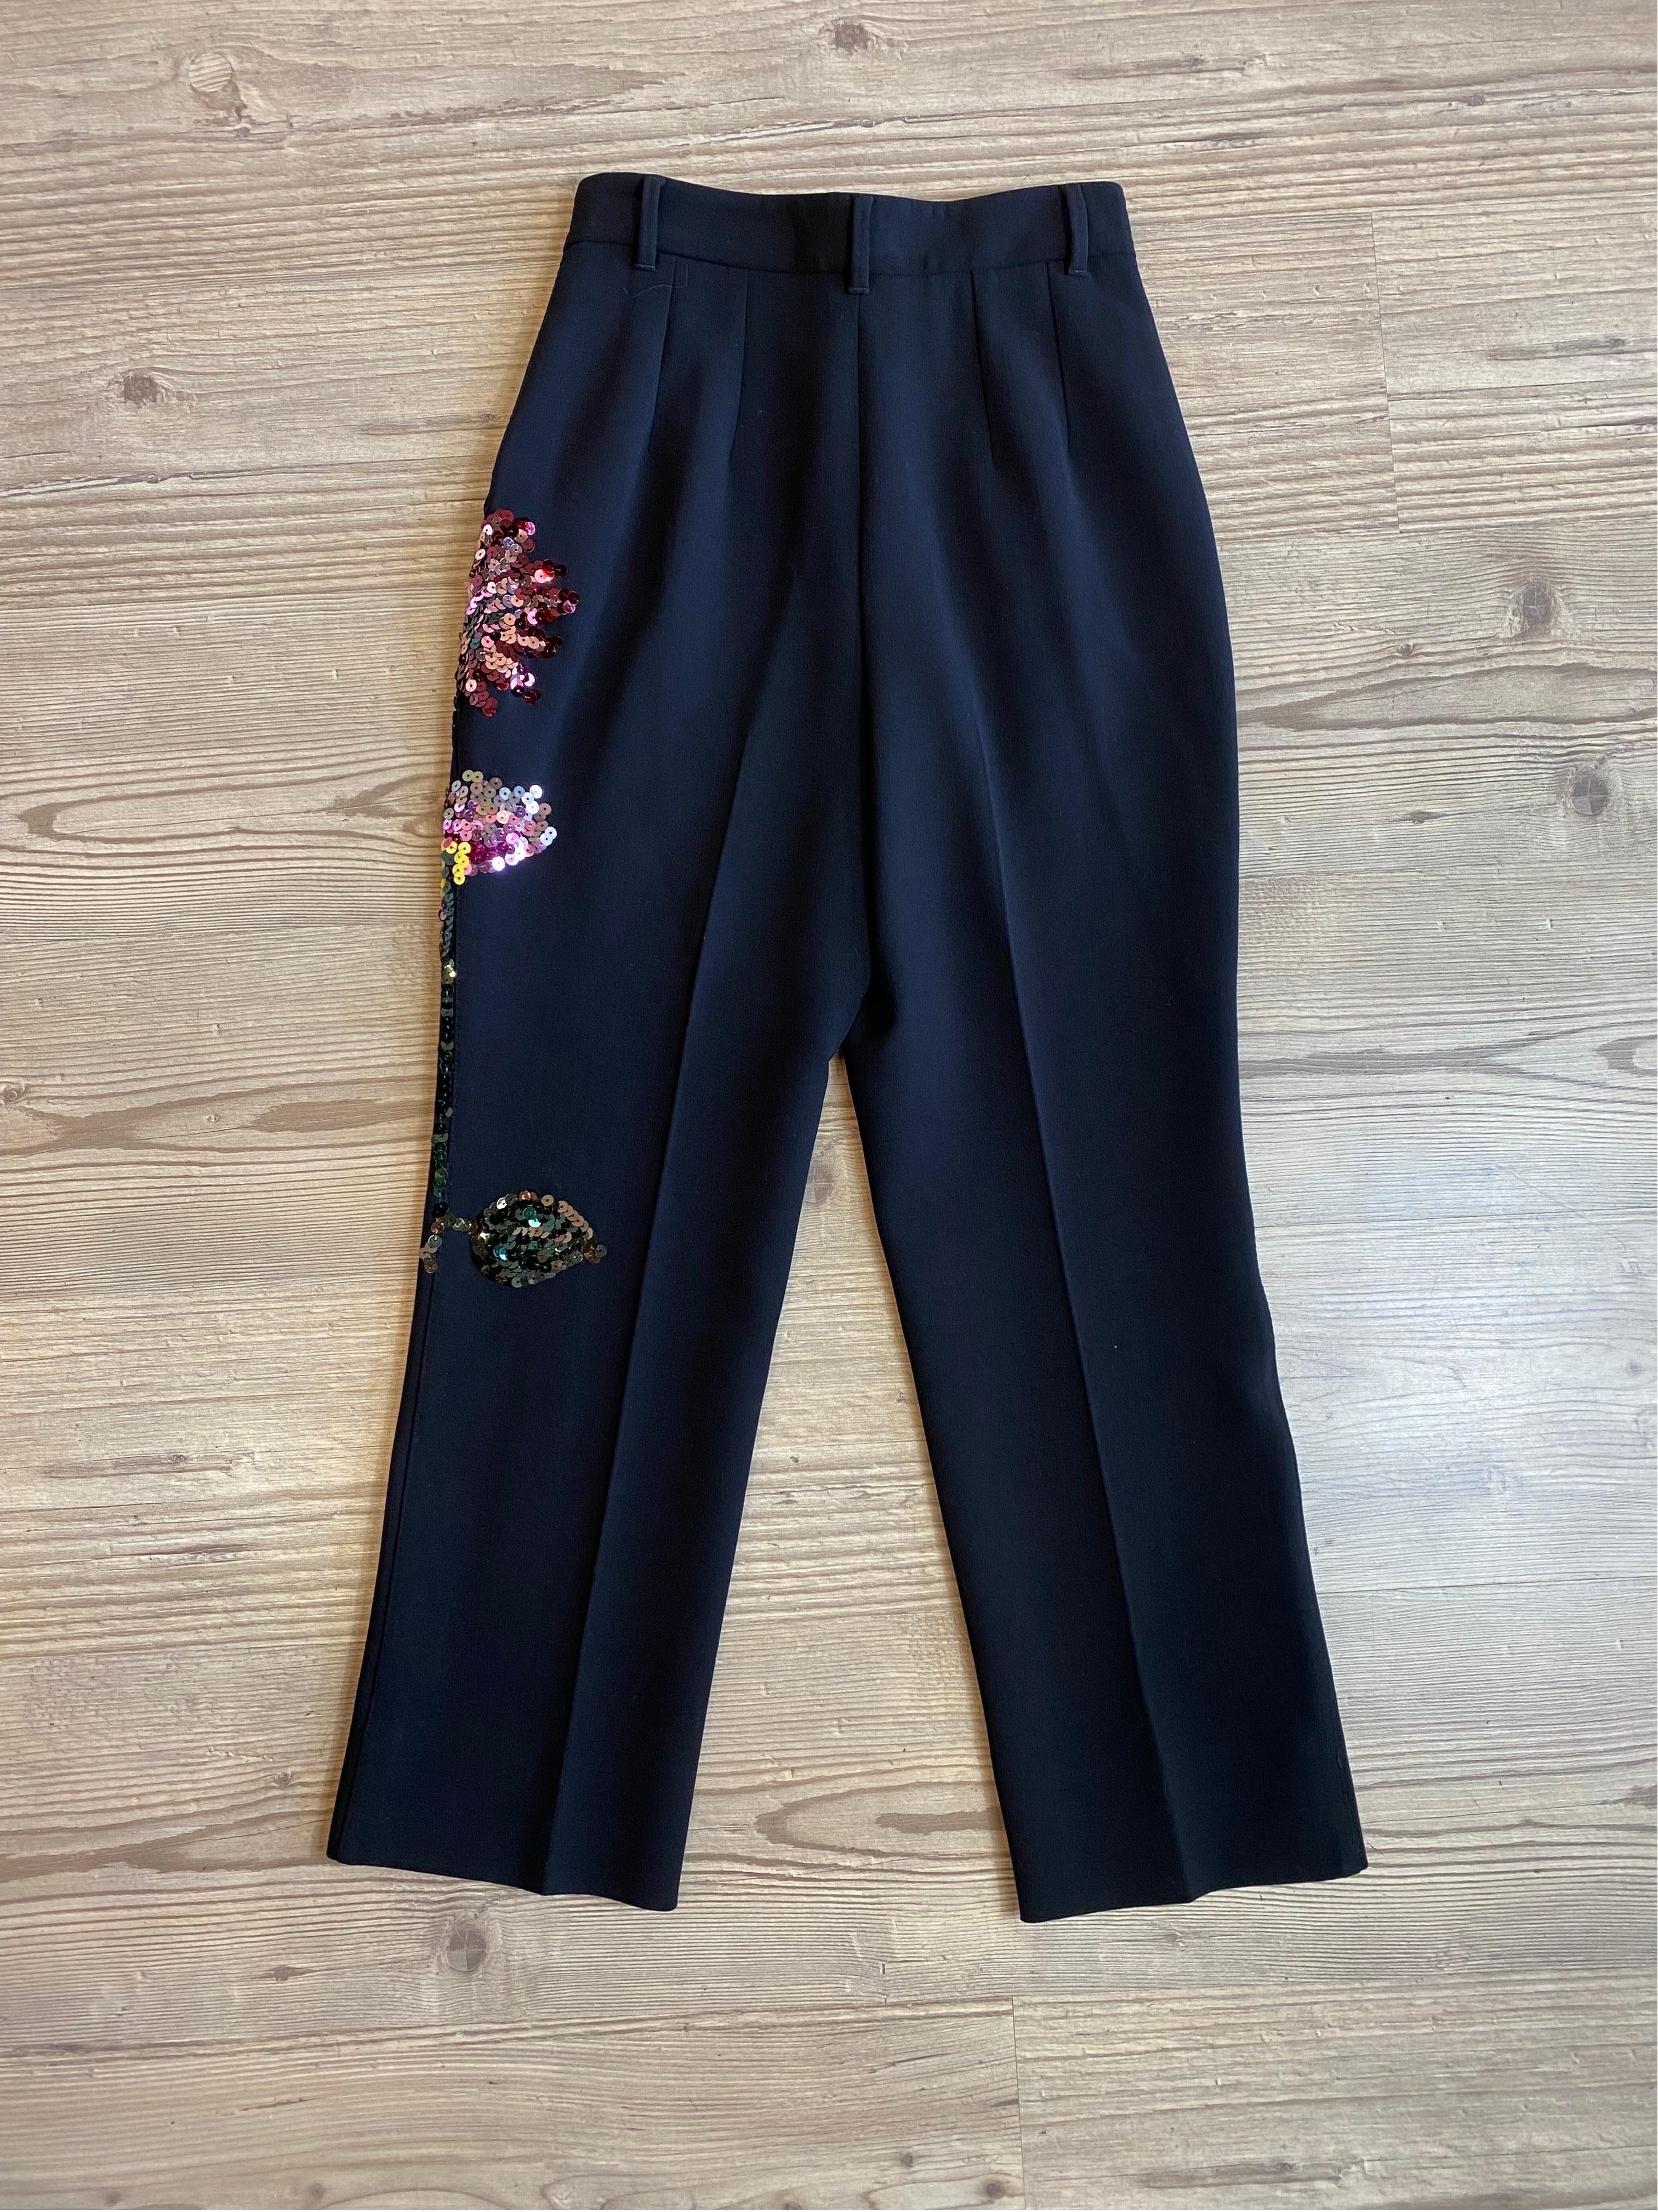 Dolce and Gabbana Slim flower strass details Black Pants For Sale 1